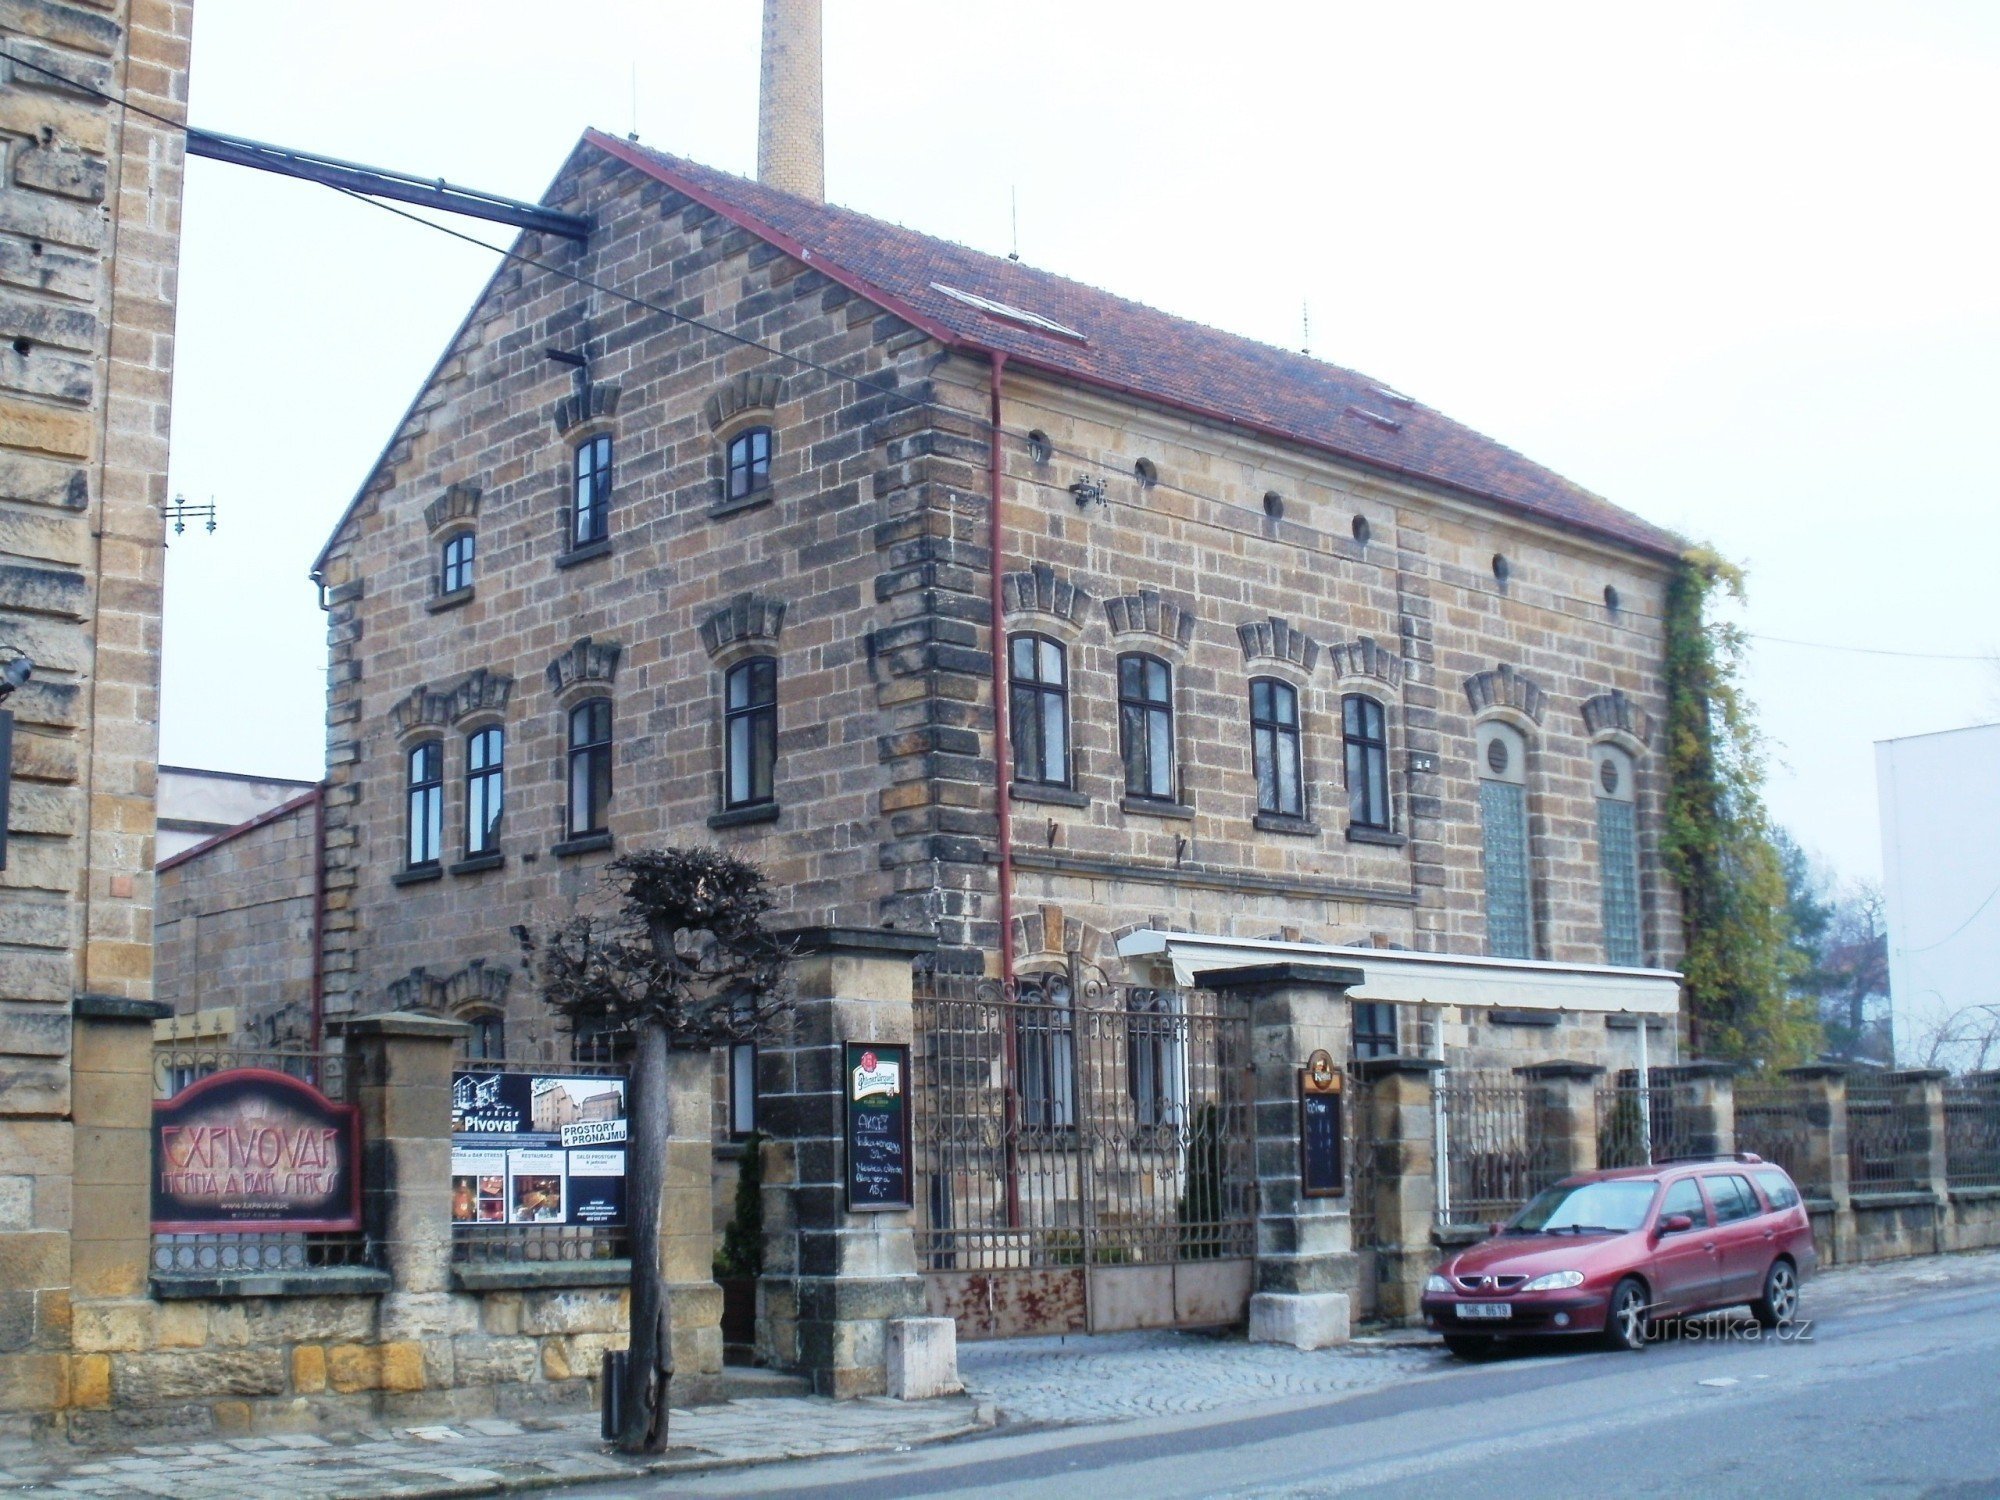 Hořice - Expivovar (ancienne brasserie)